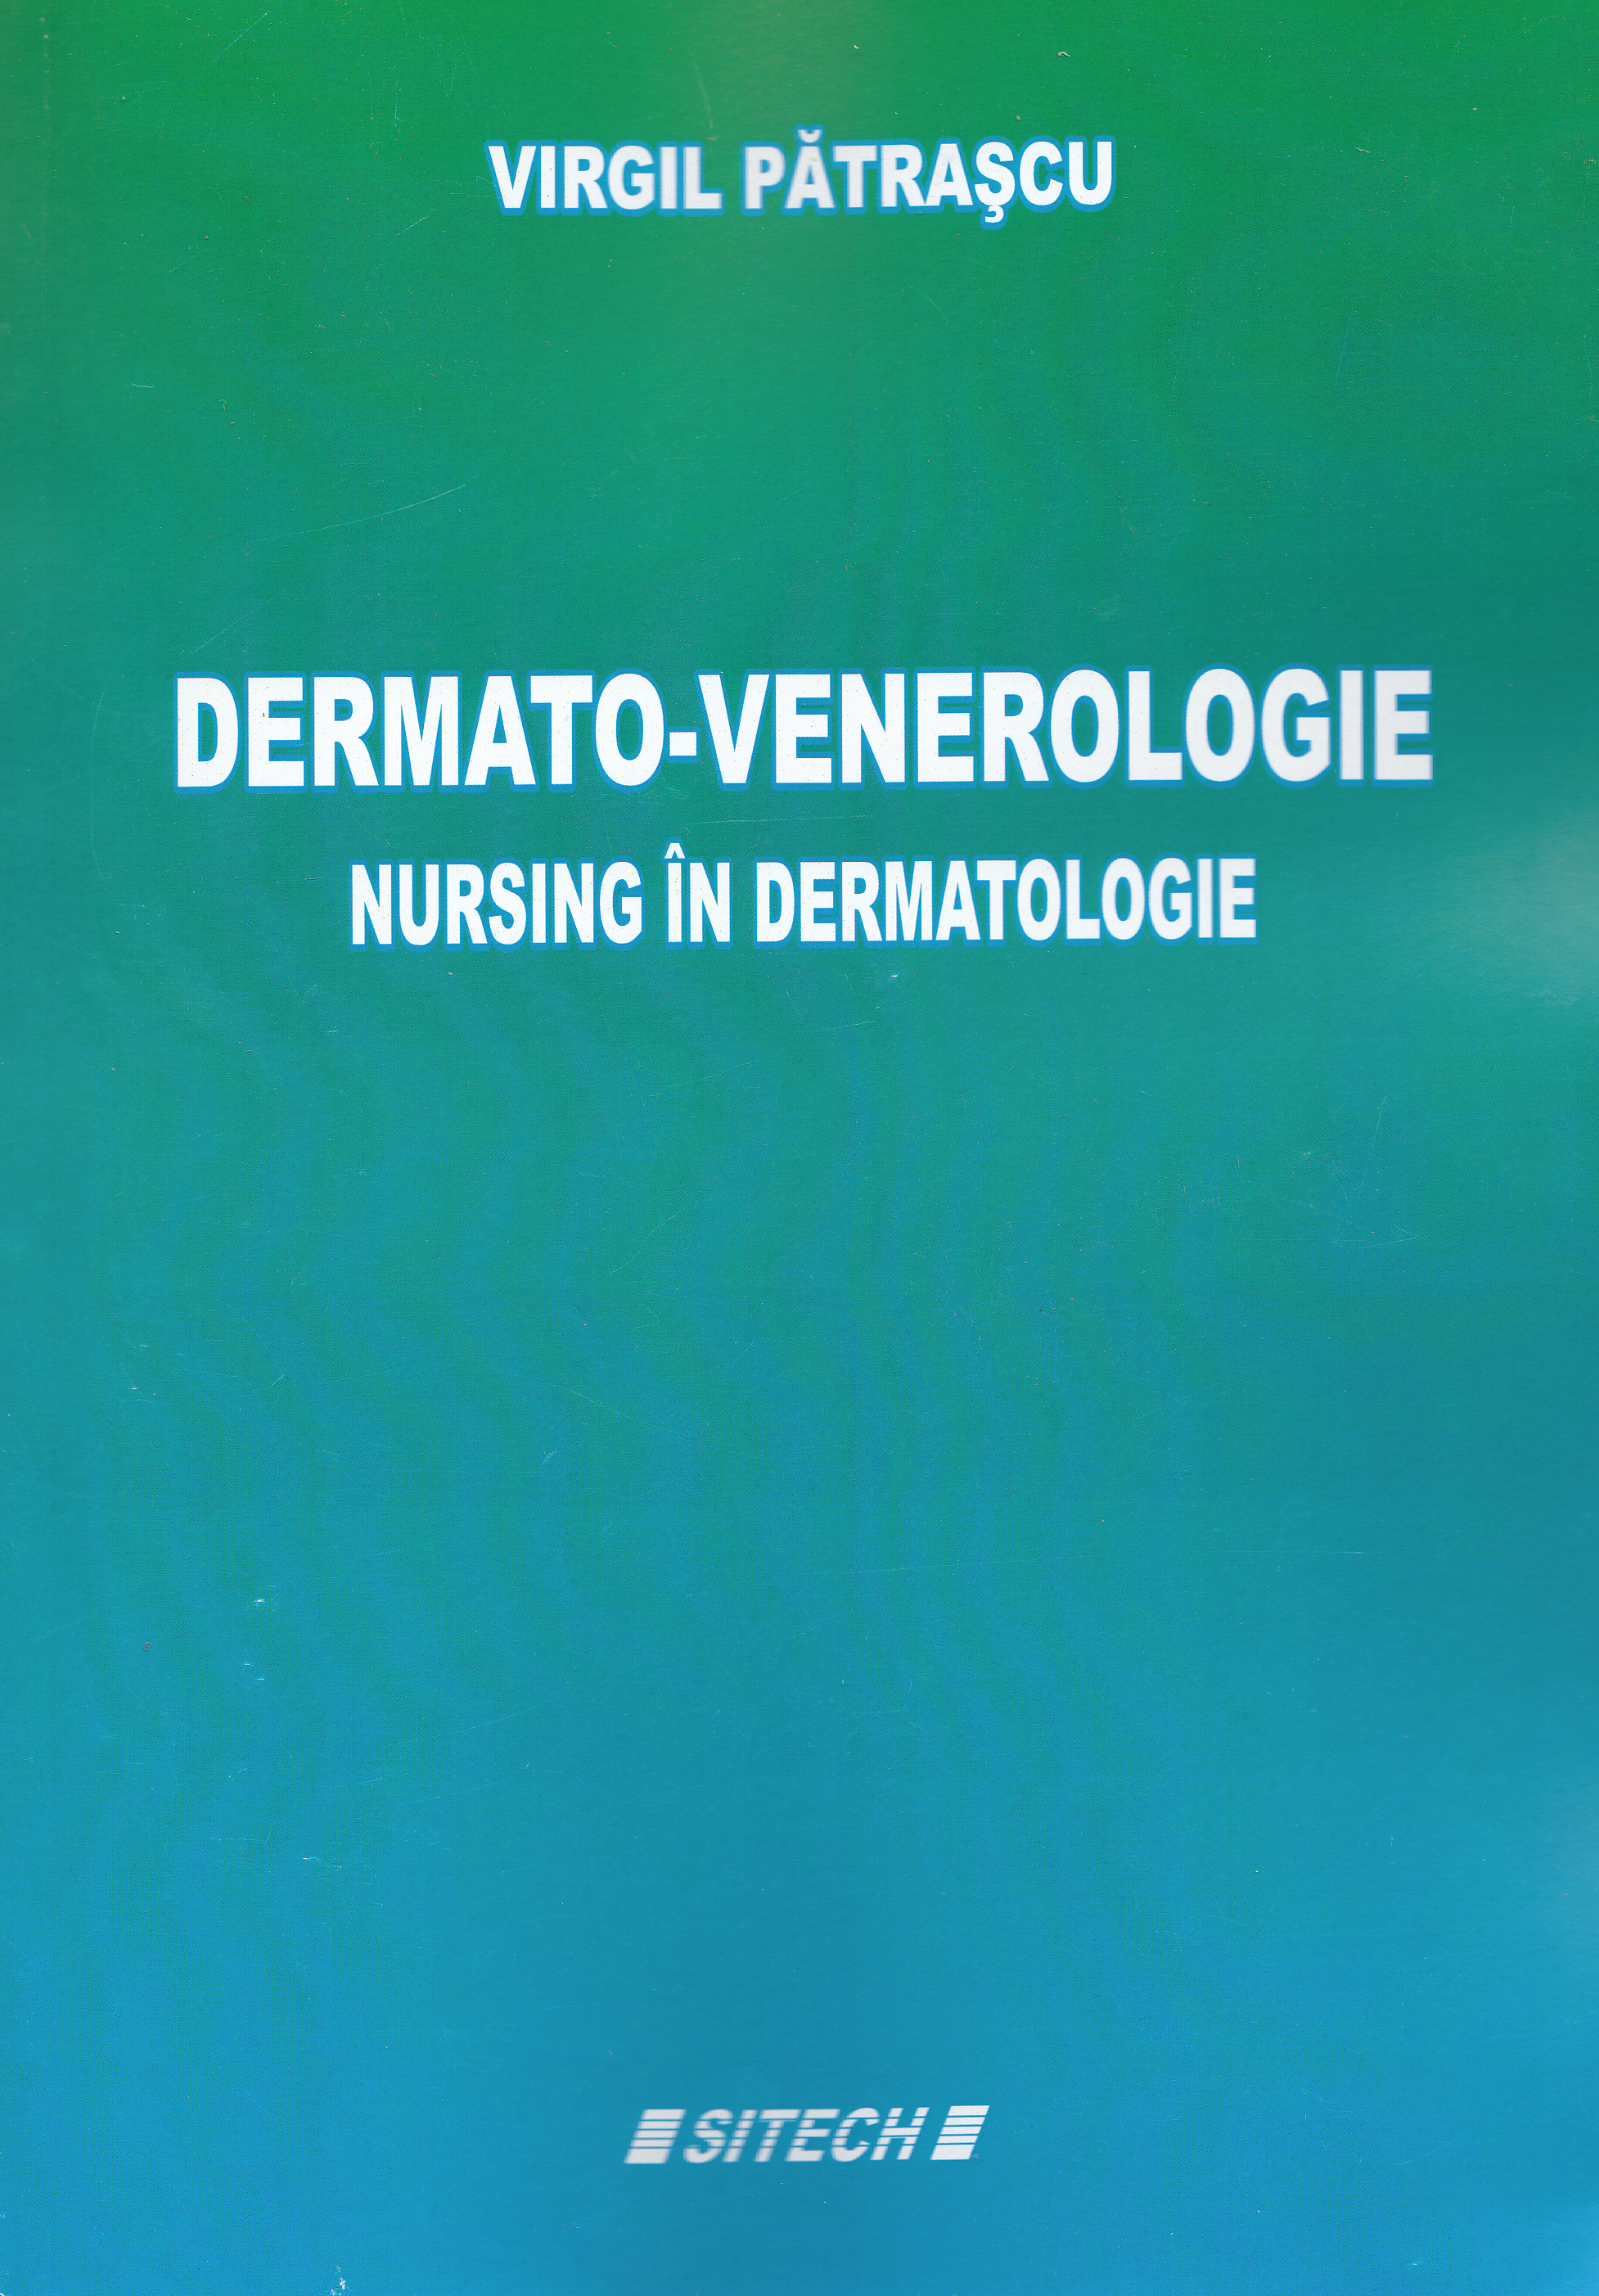 Dermato-venerologie. Nursing in dermatologie - Virgil Patrascu